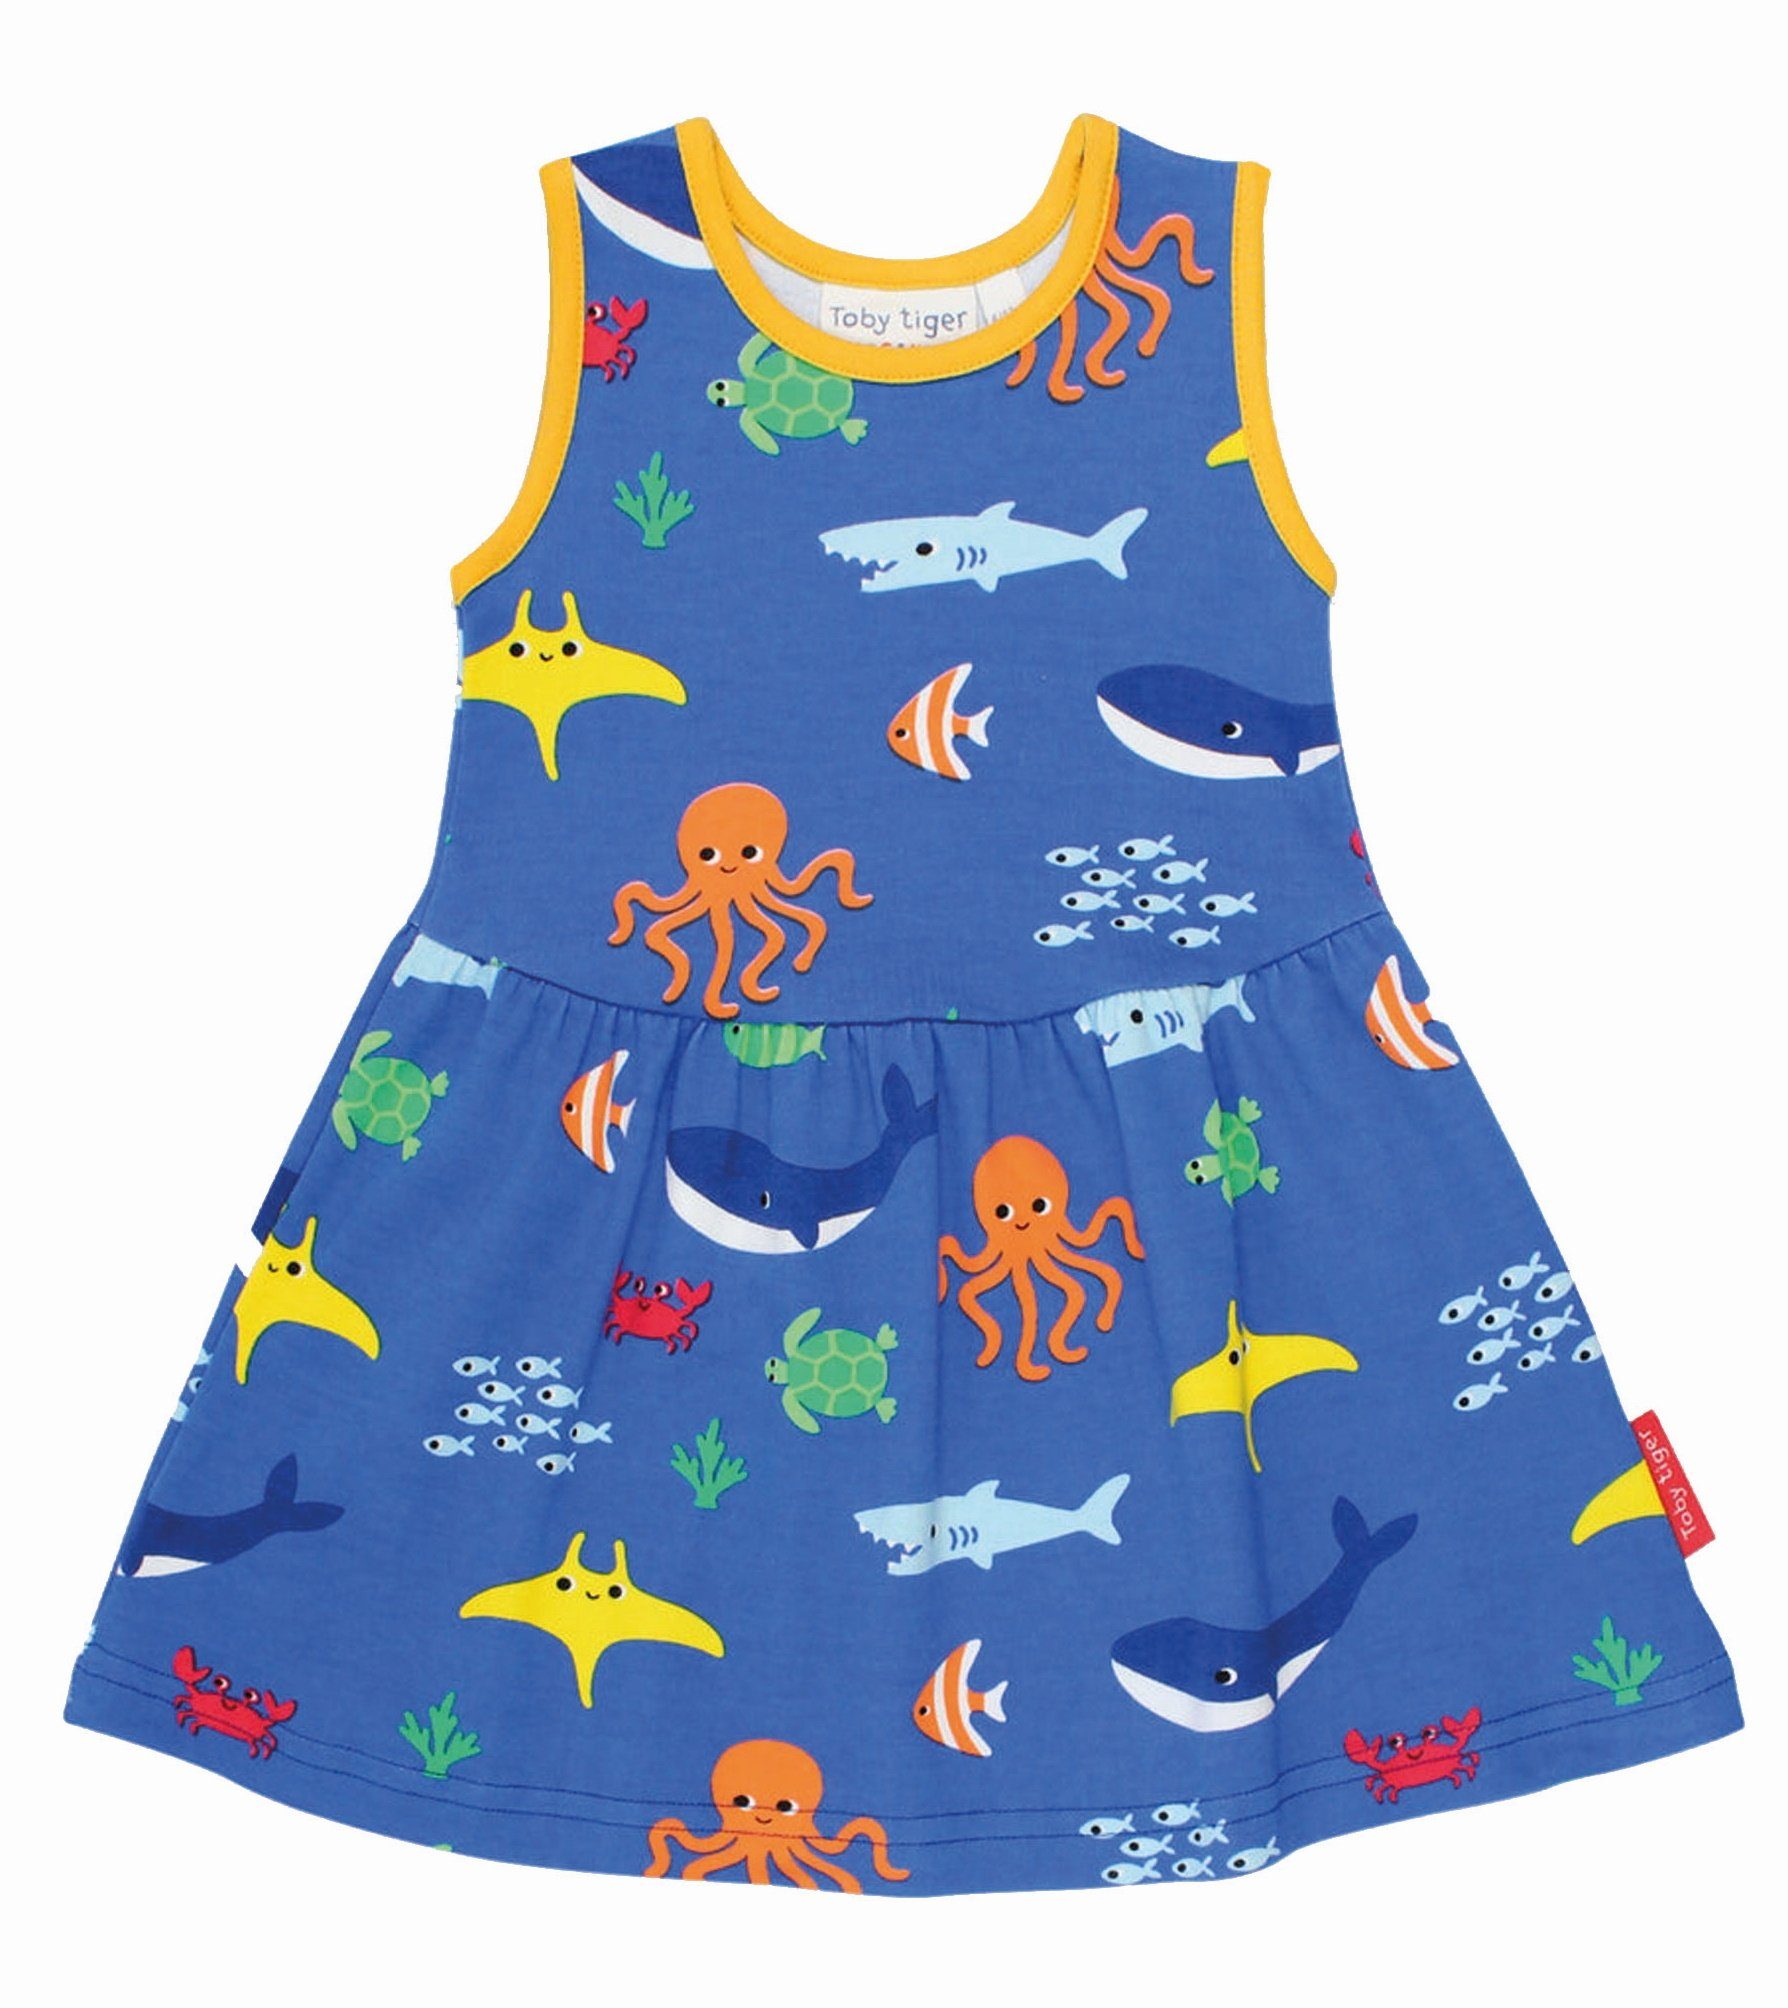 Toby Tiger Shirtkleid Kleid mit Meerestiere Print